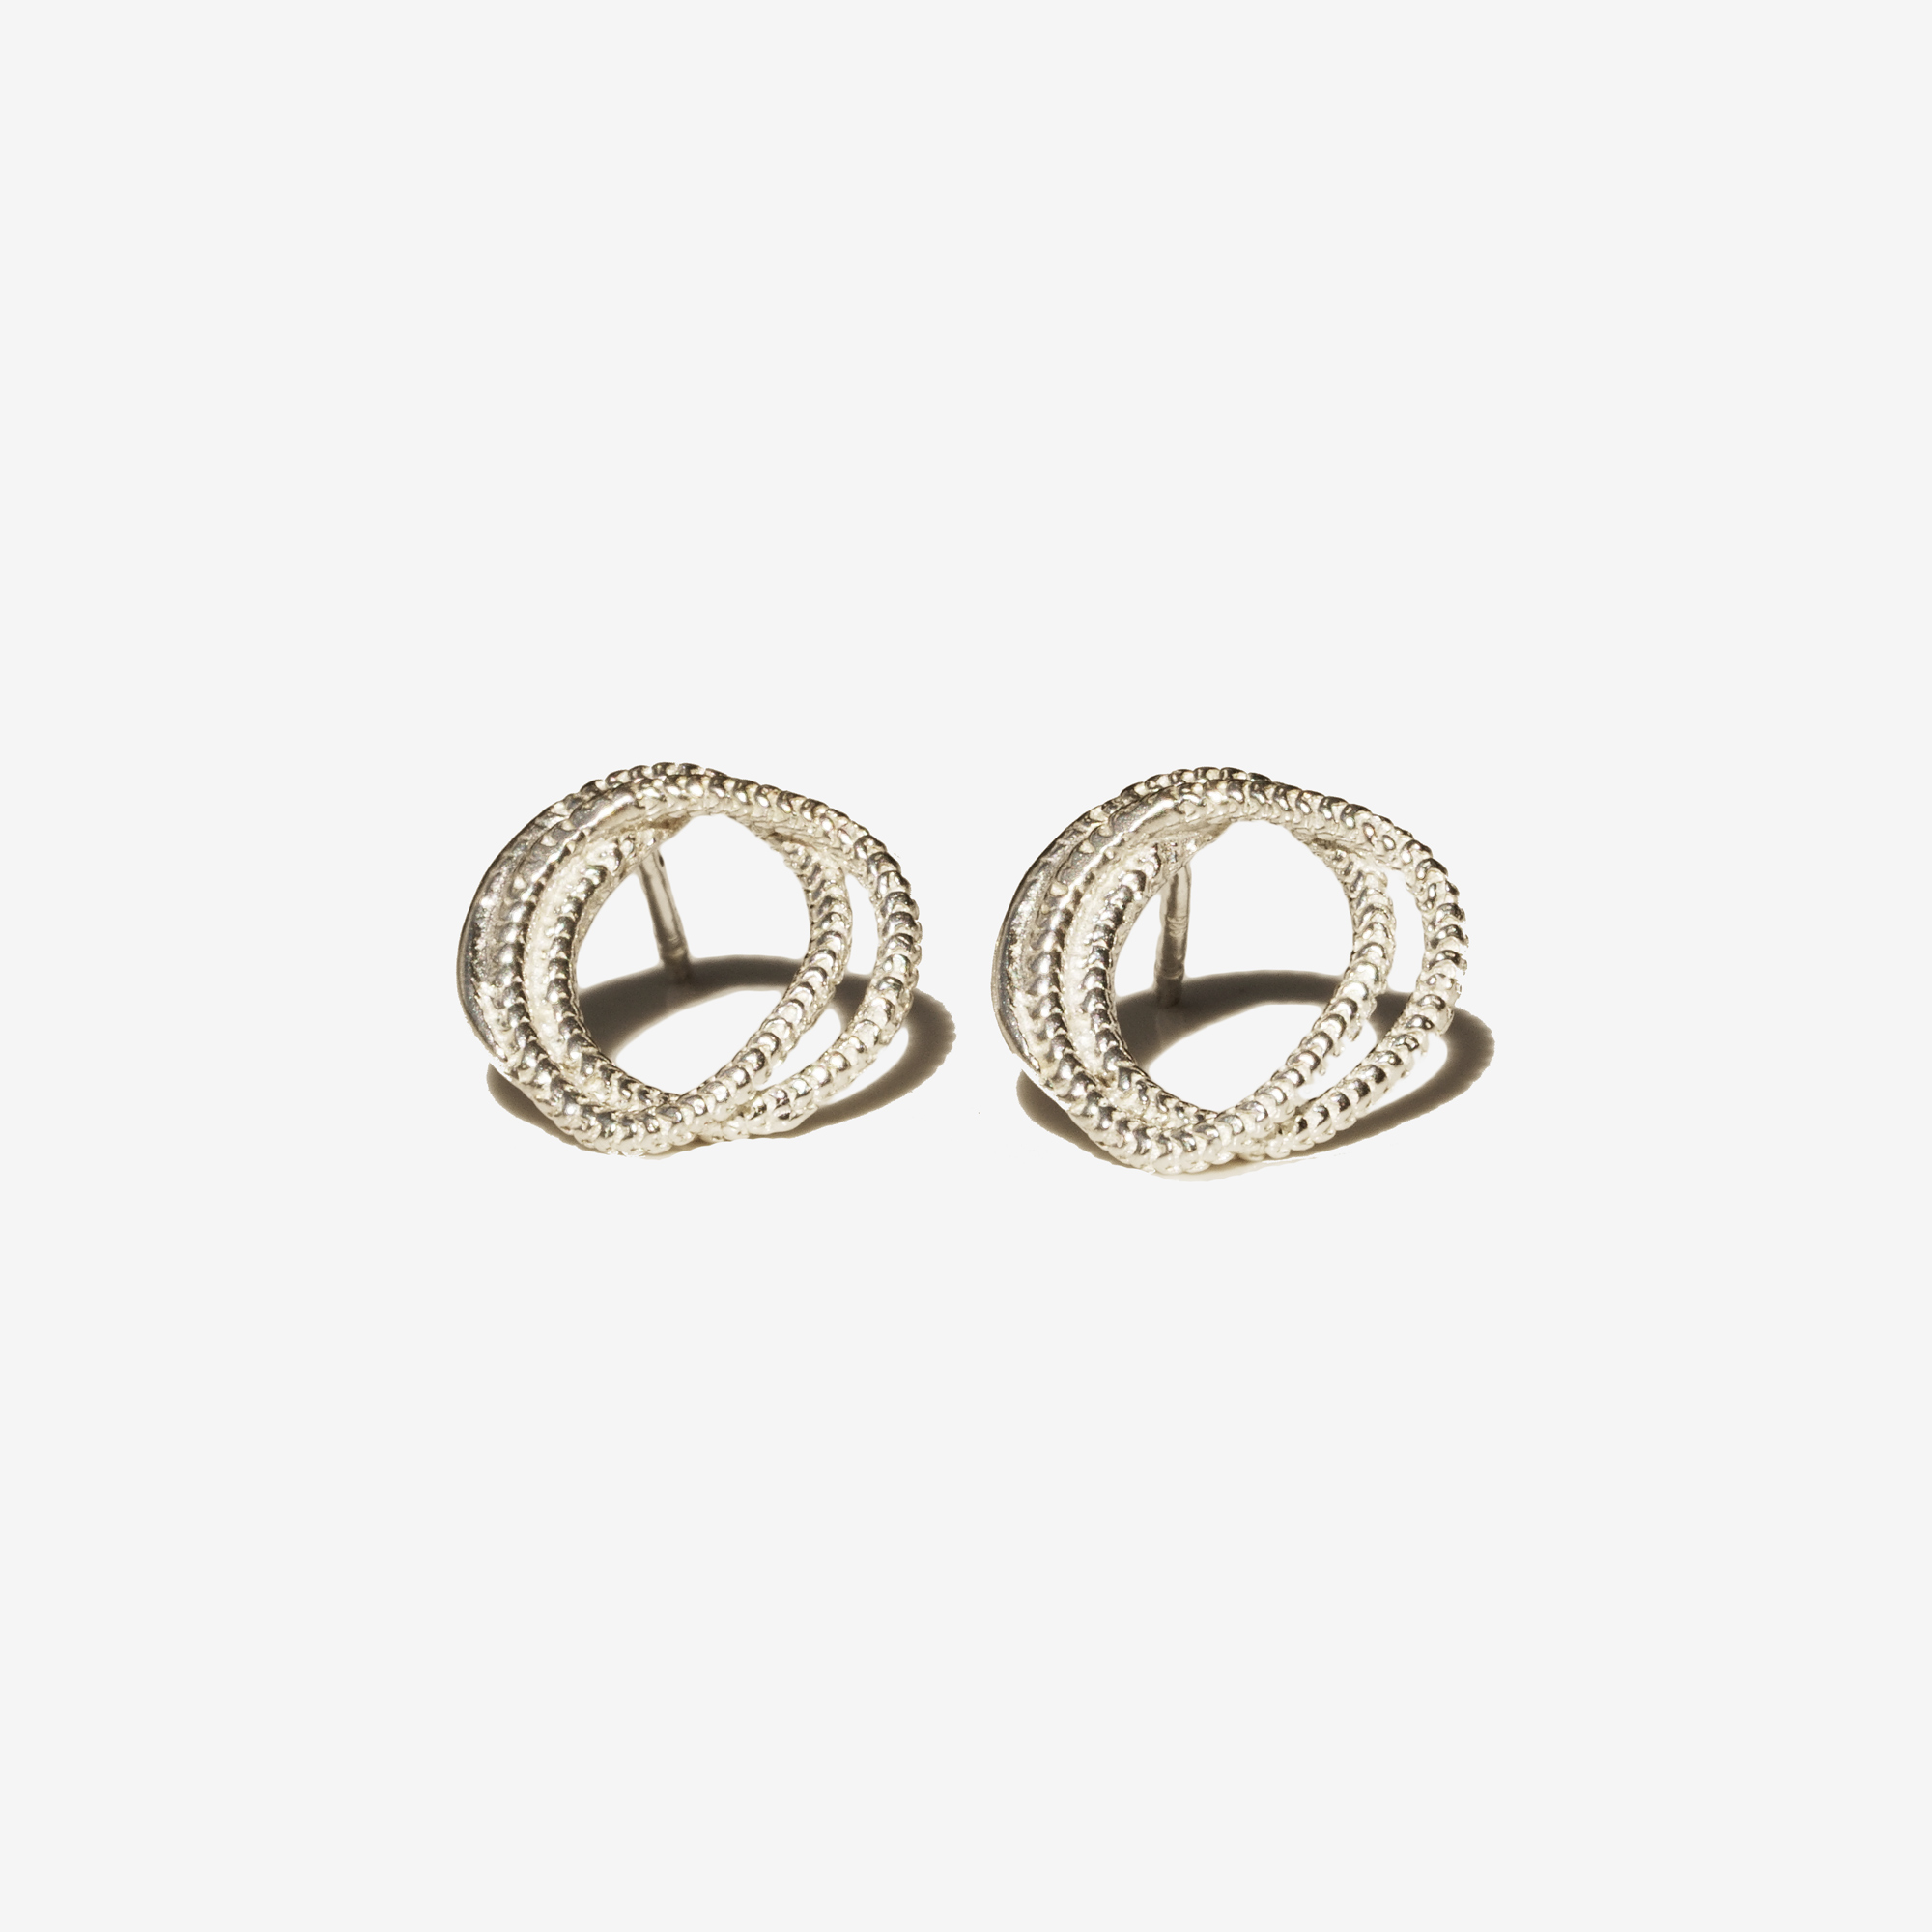 Rosa silver earrings - NURA.design